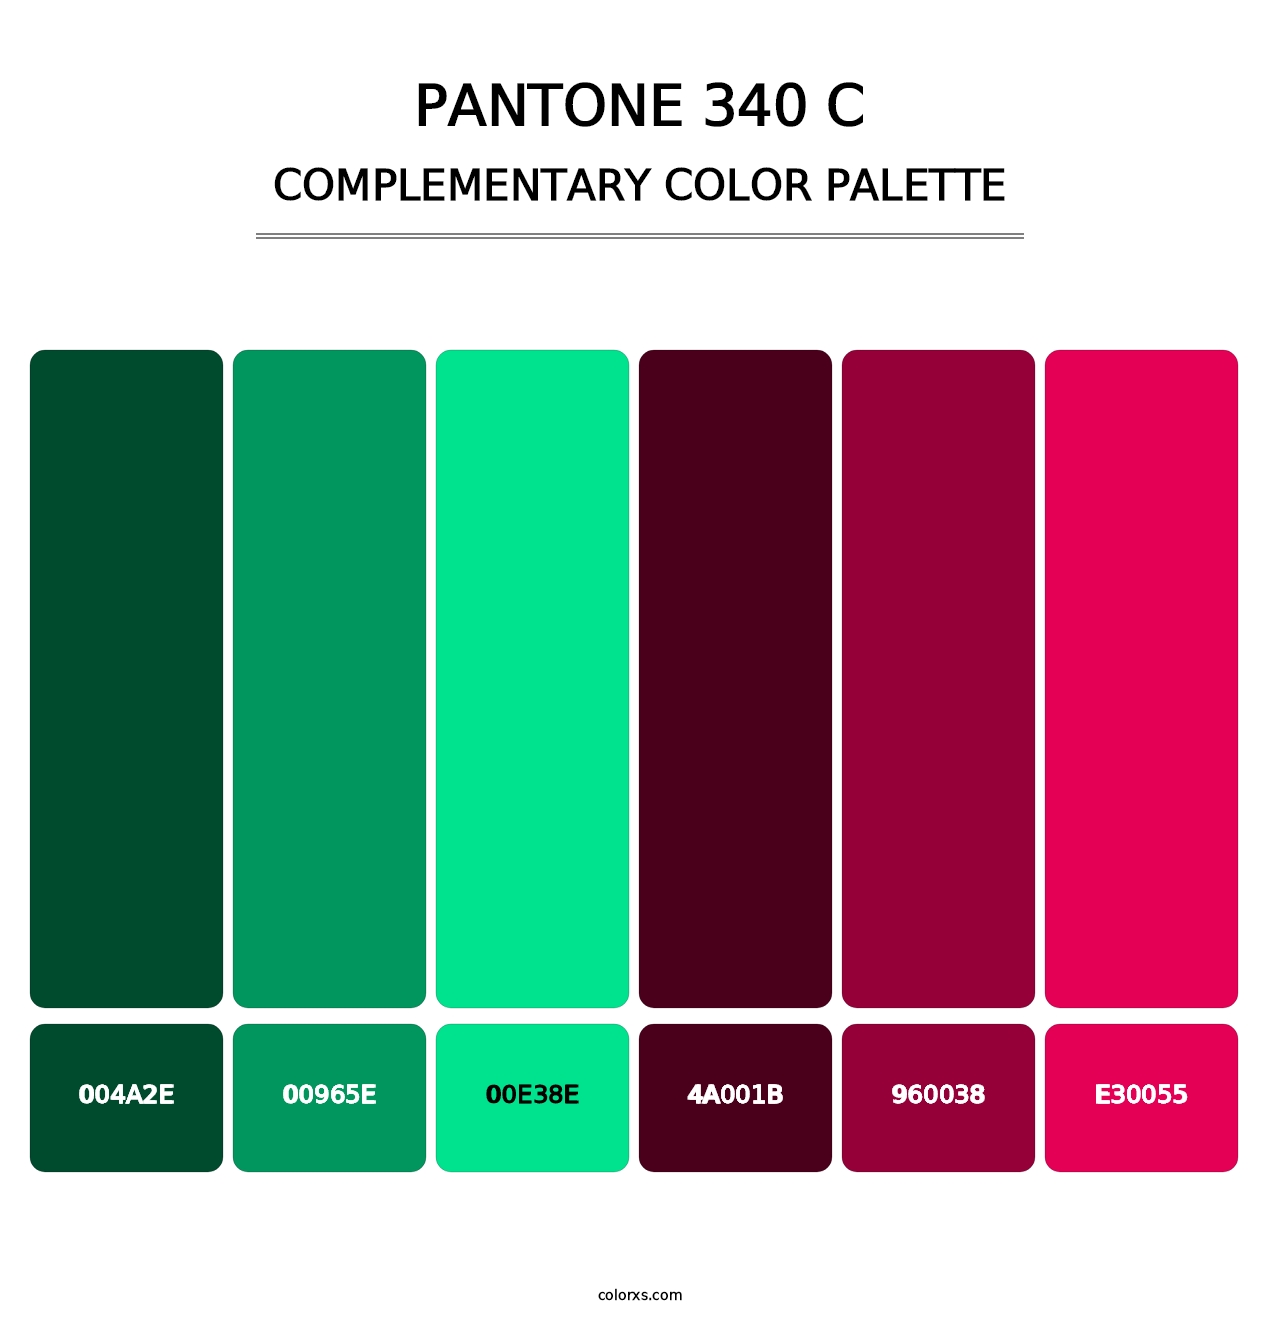 PANTONE 340 C - Complementary Color Palette